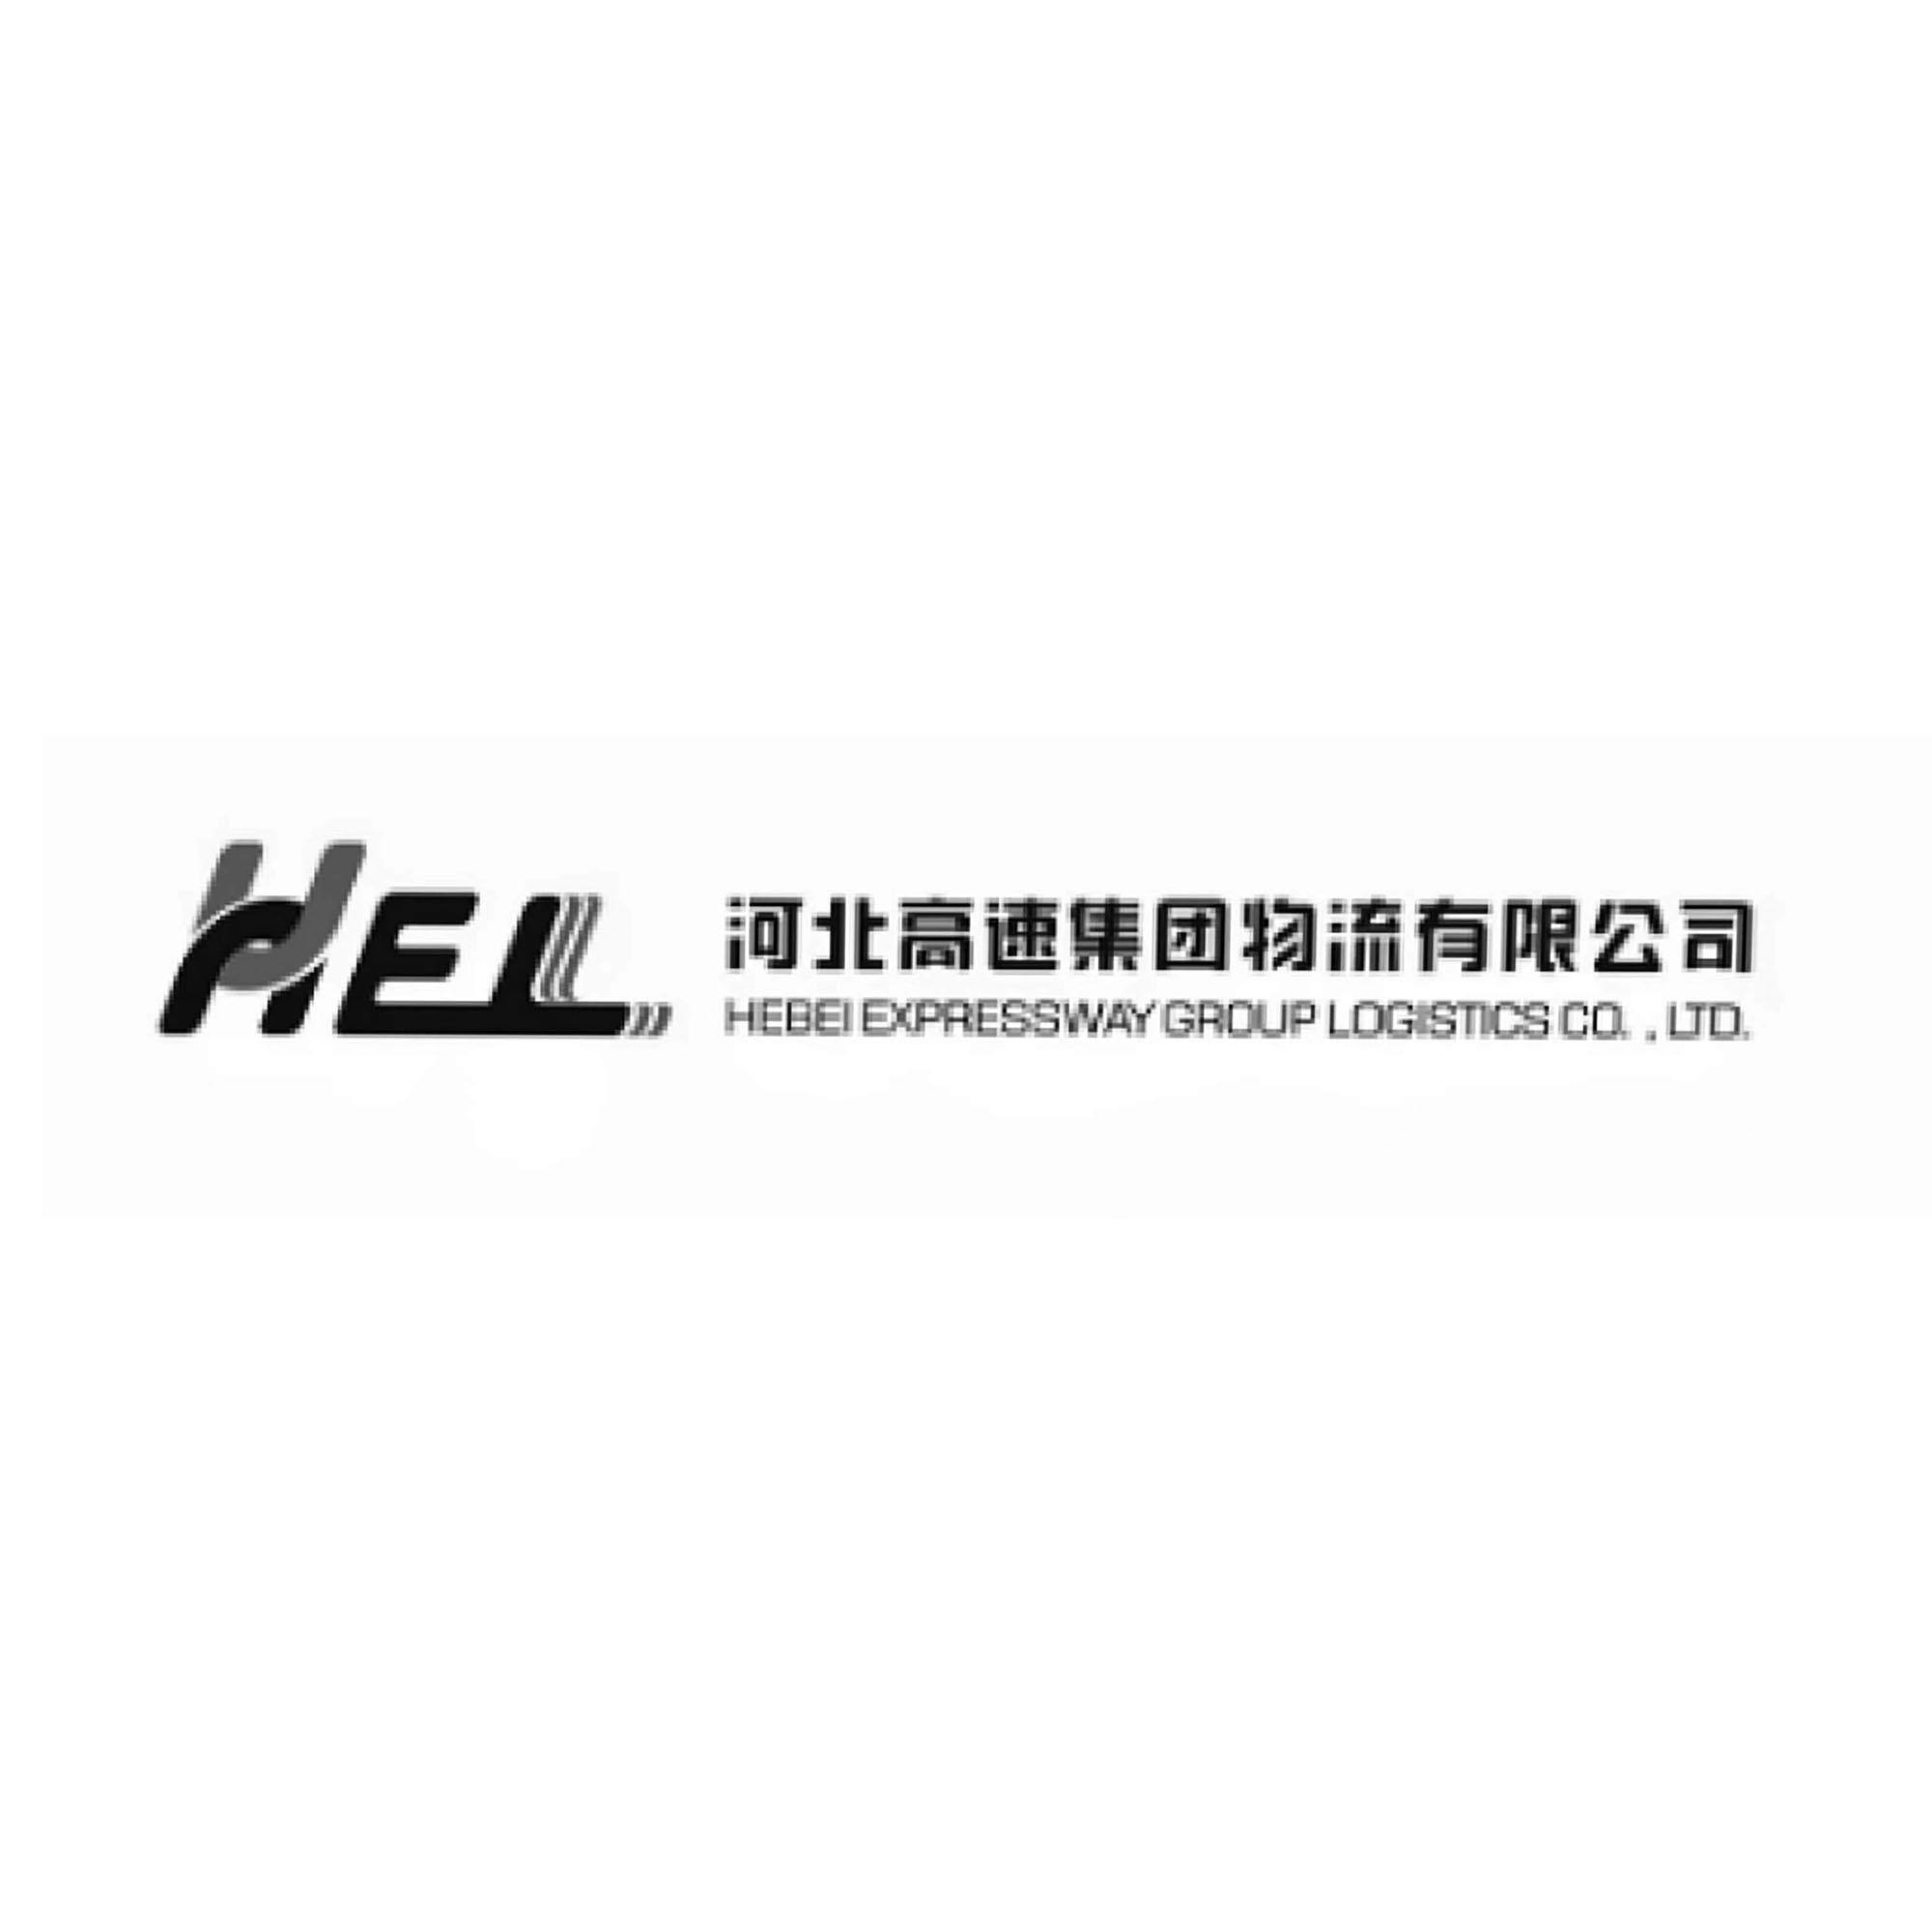 HEL 河北高速集团物流有限公司 HEBEI EXPRESSWAY GROUP LOGISTICS CO.，LTD.